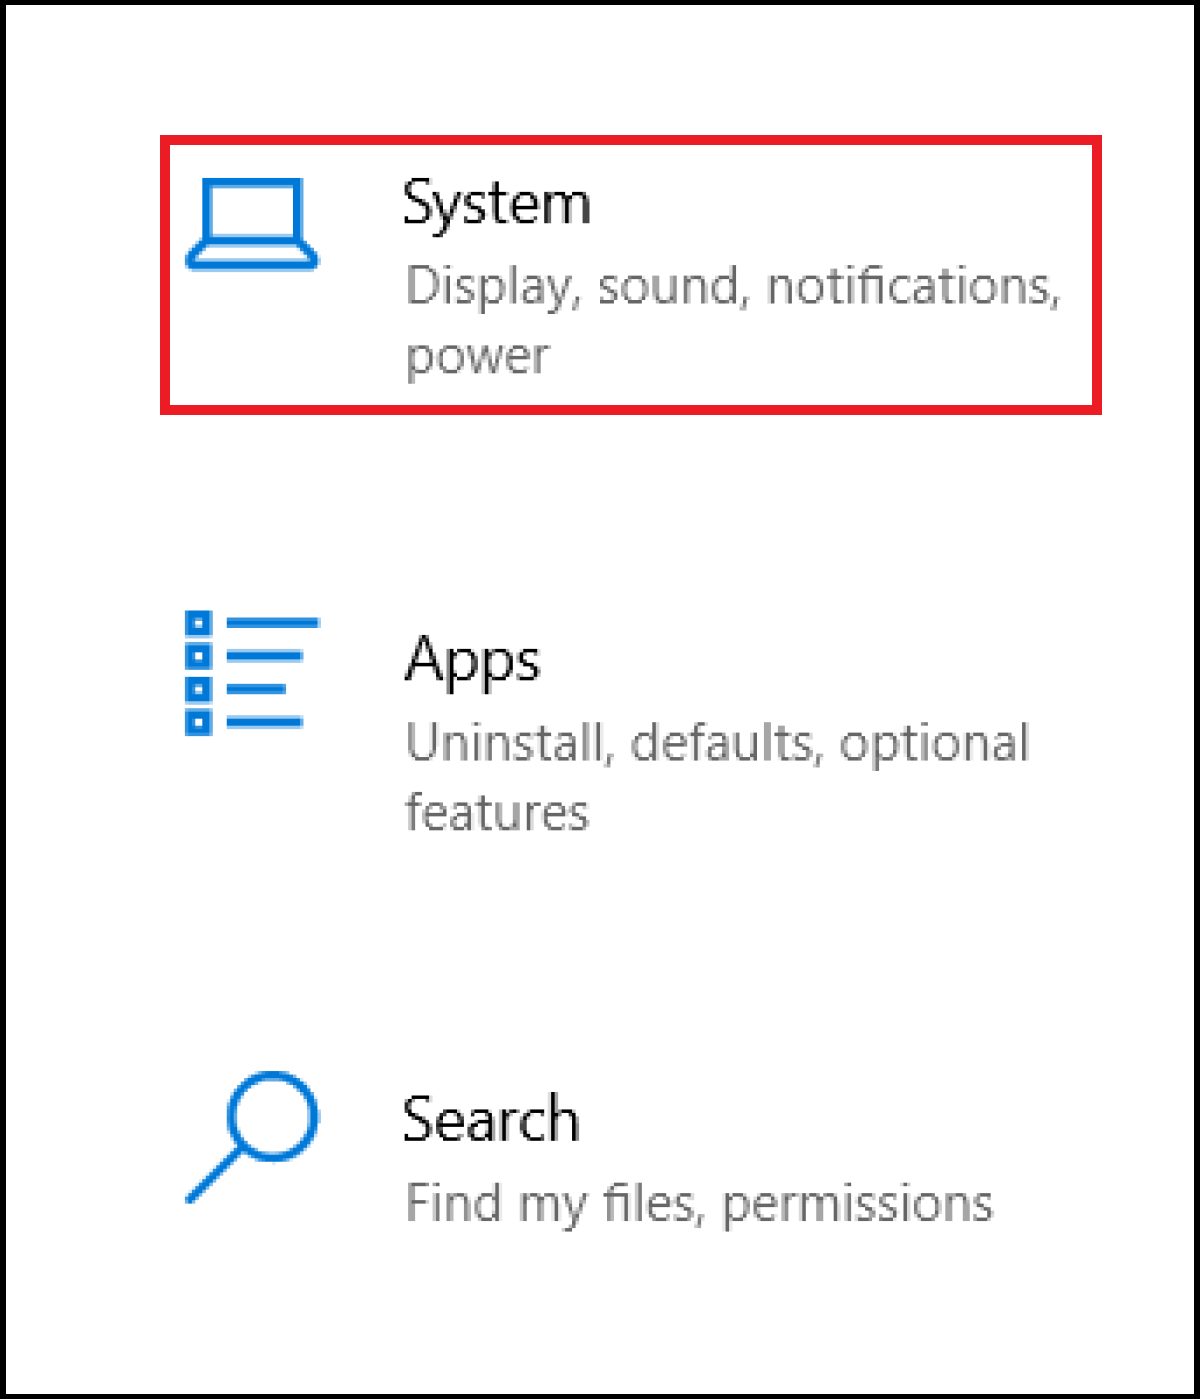 Windows 10: Overview of Windows settings menu